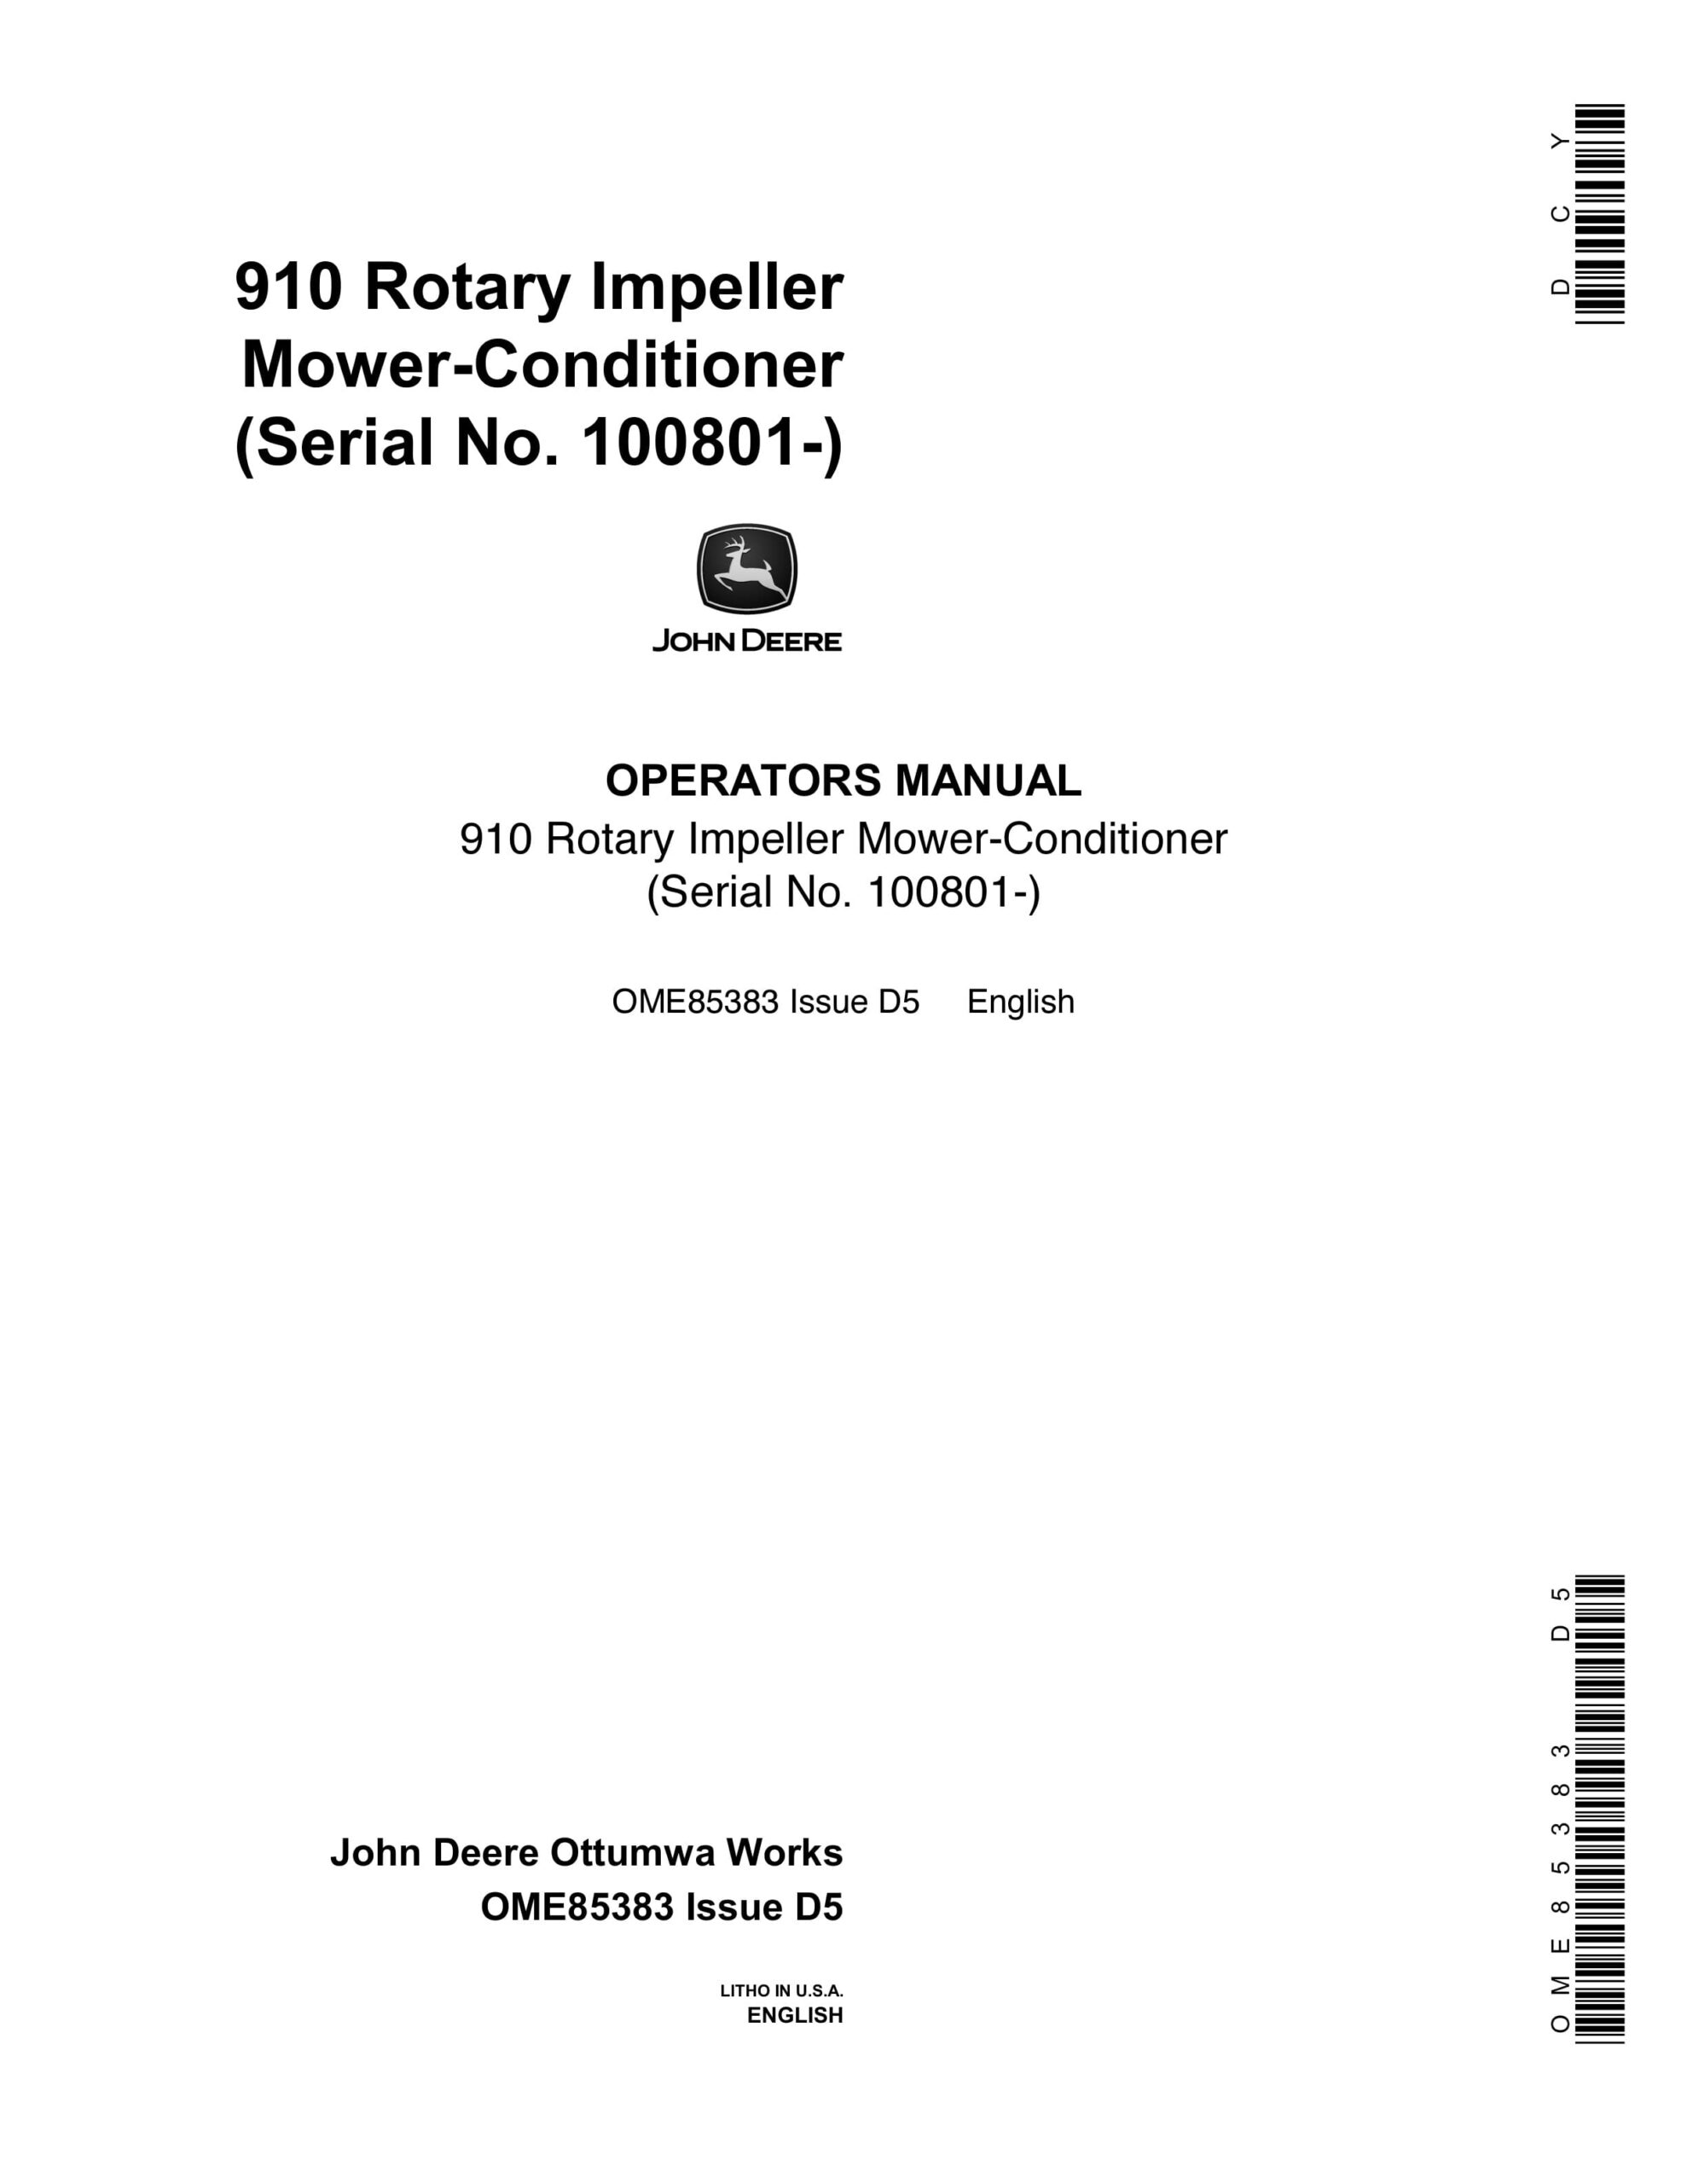 John Deere 910 Rotary Impeller Mower-Conditioner Operator Manual OME85383-1